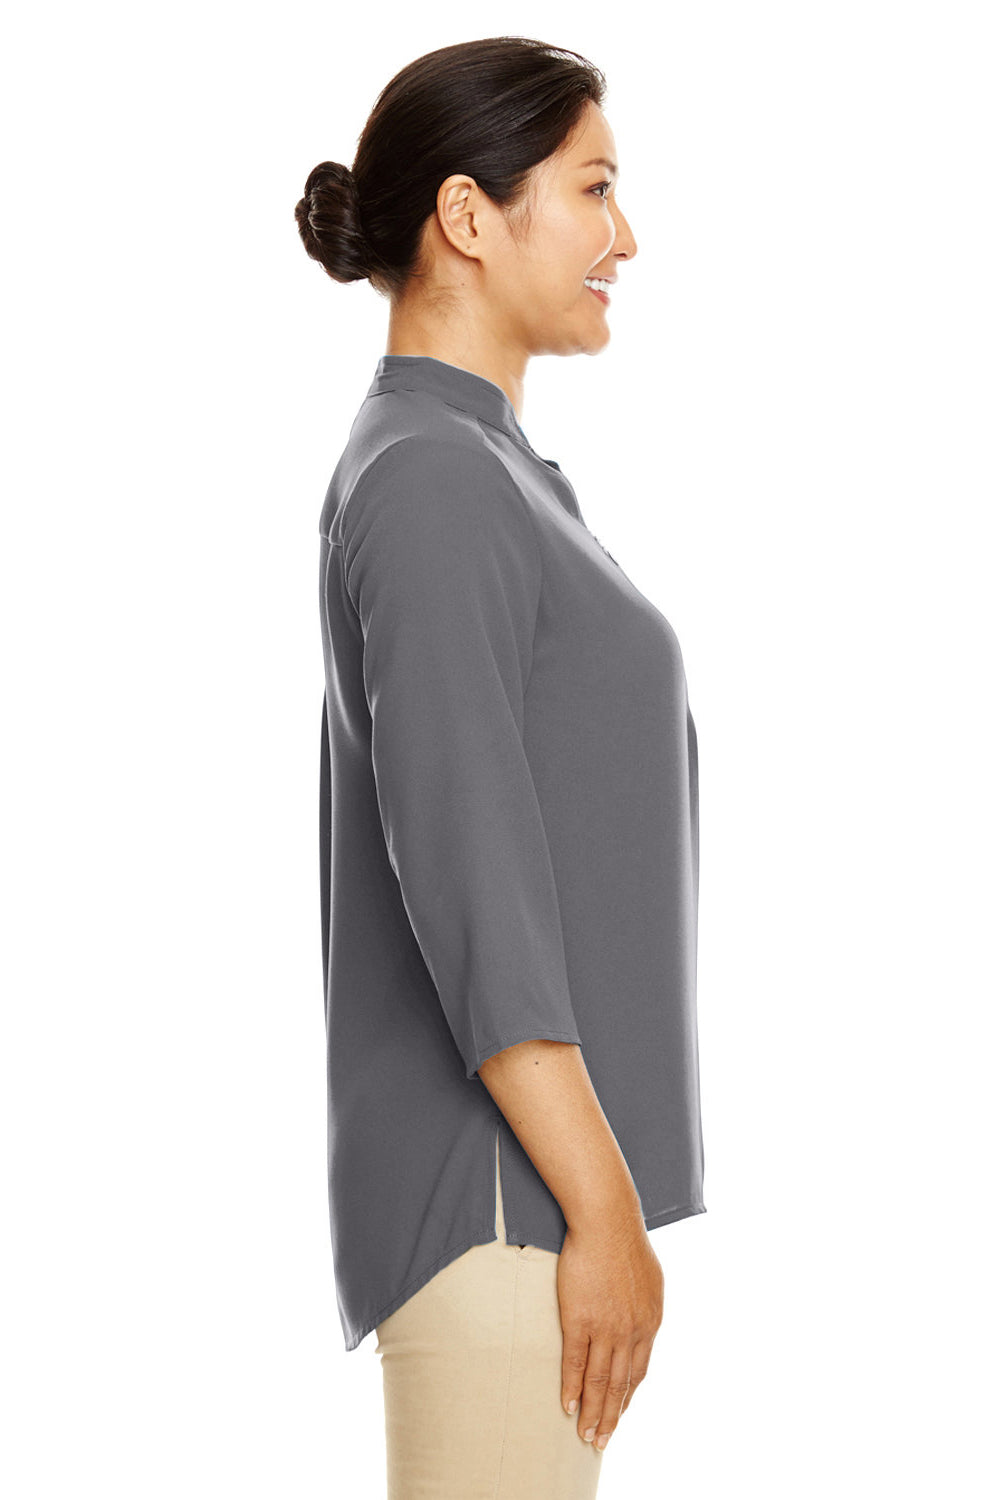 Devon & Jones DP611W Womens Perfect Fit Short Sleeve 1/4 Zip Crepe Tunic Graphite Grey SIde